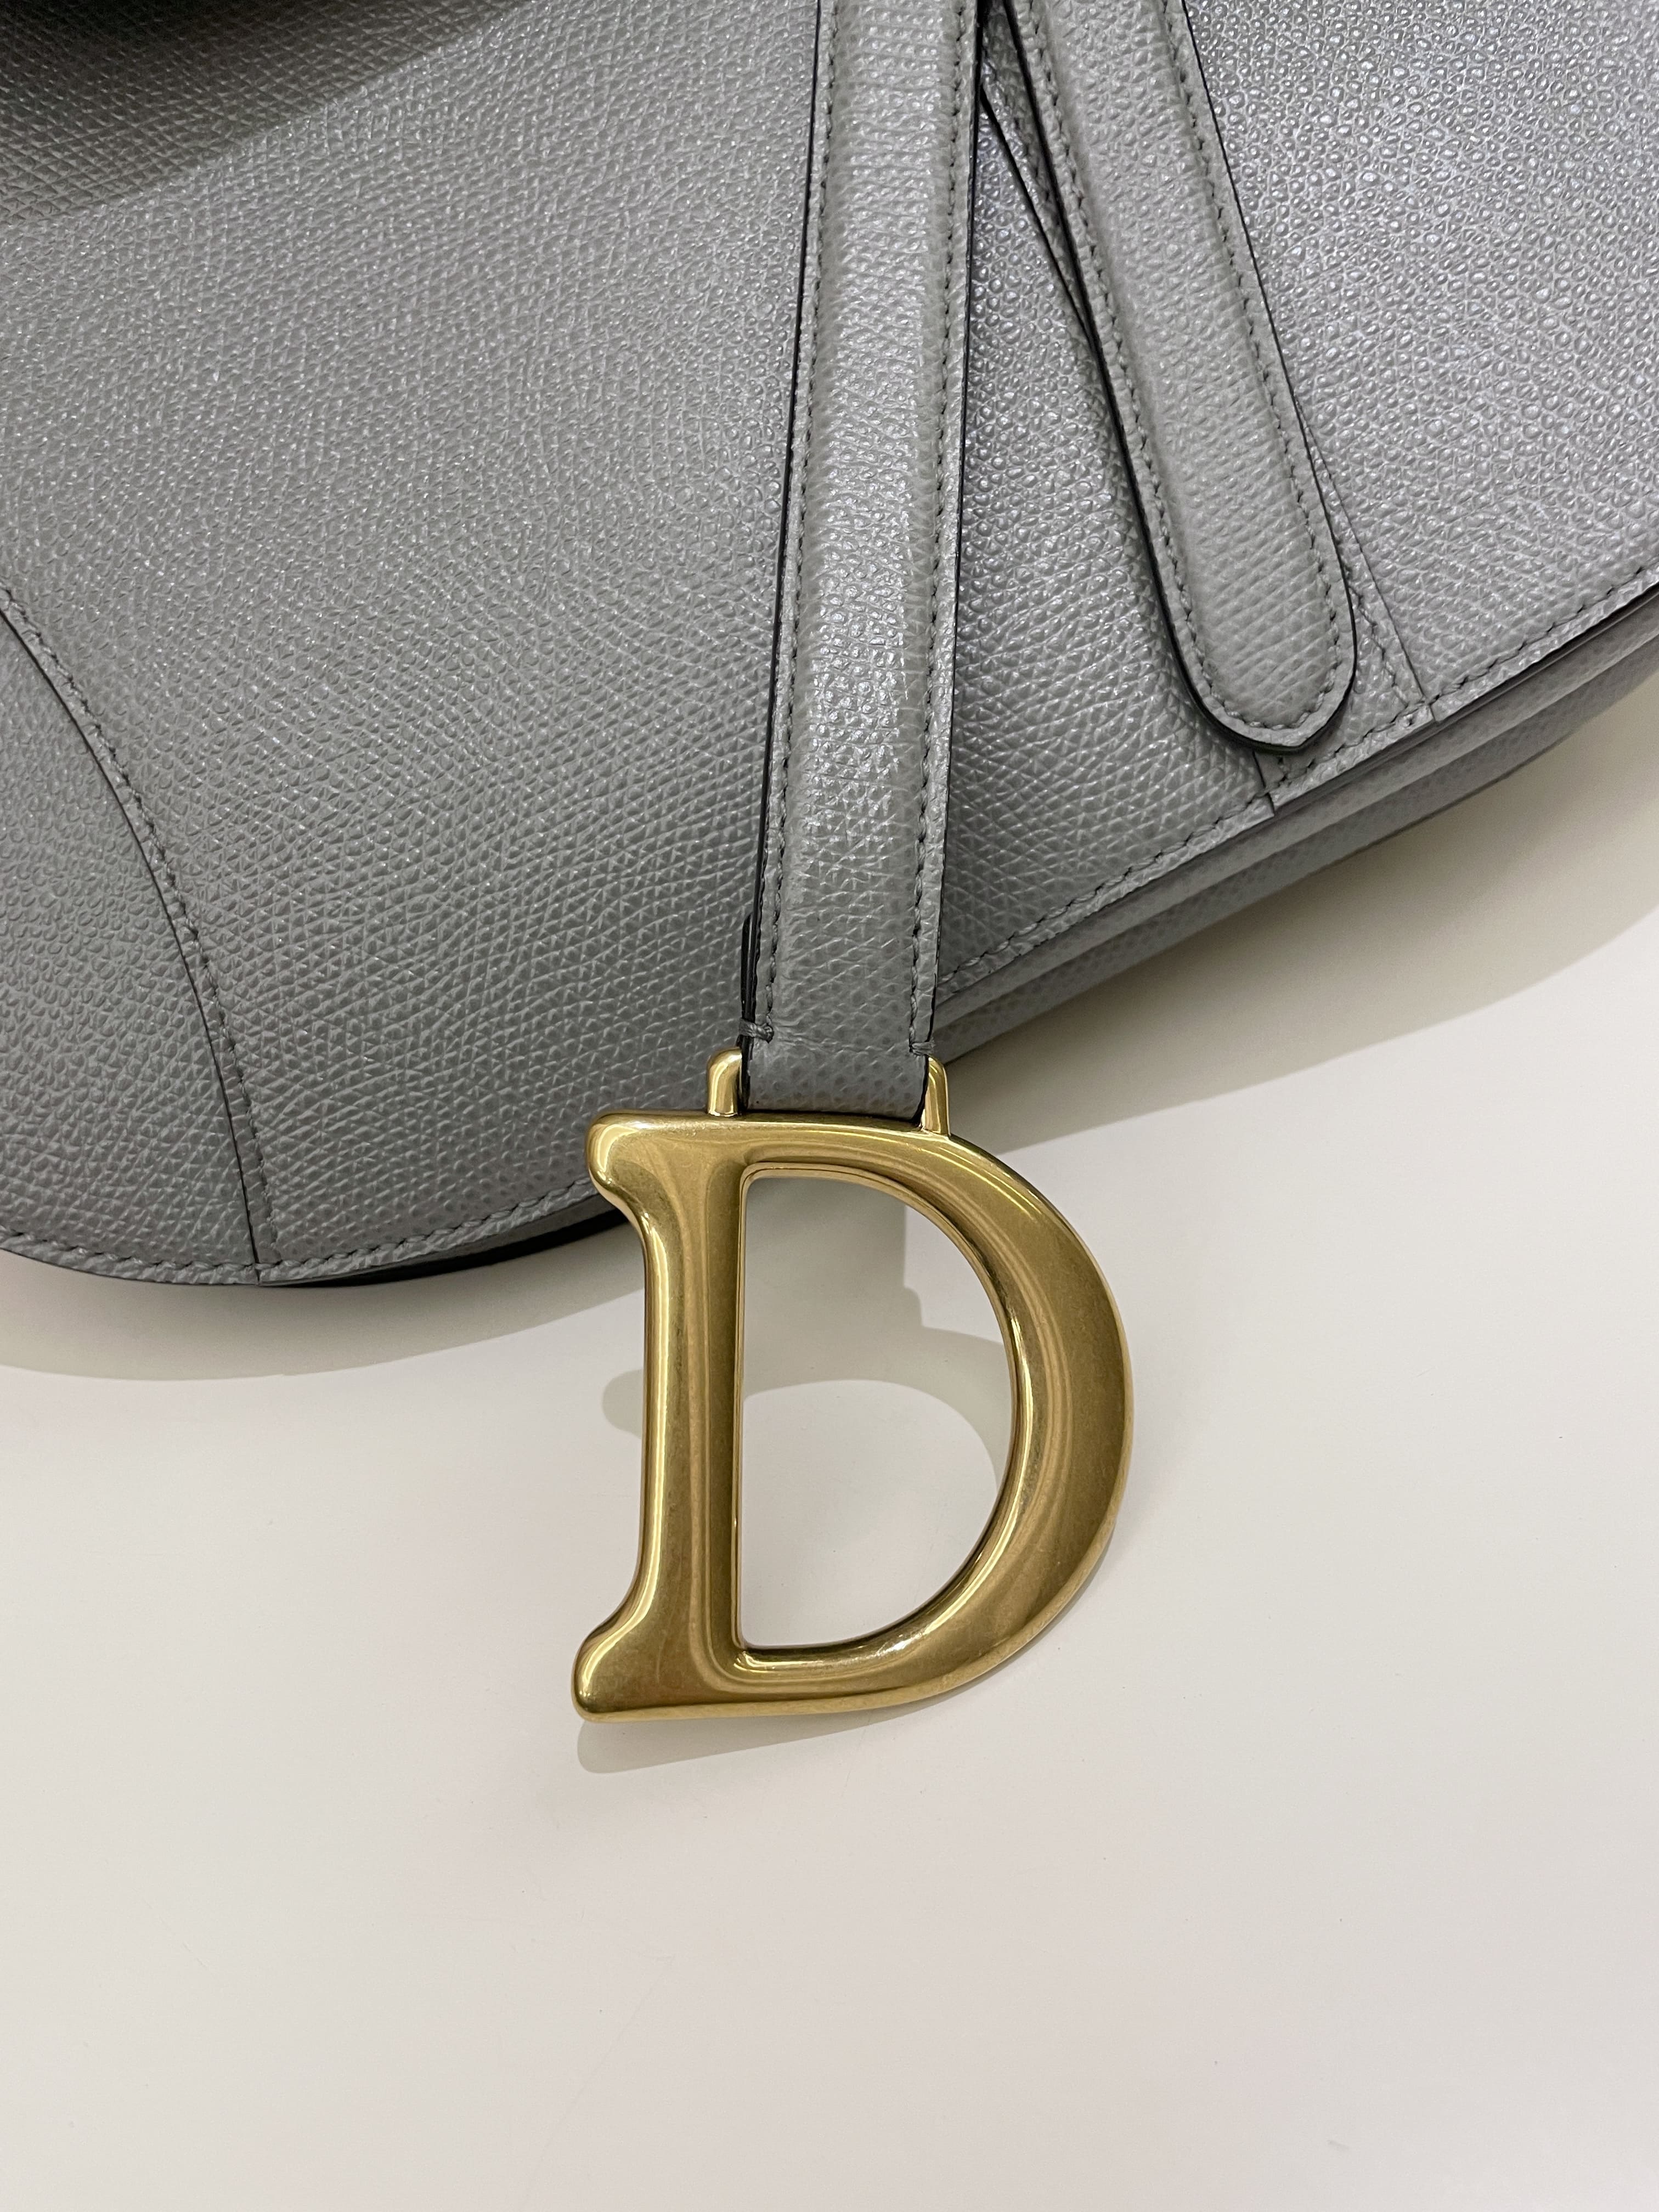 Dior Saddle Bag Gray Grained